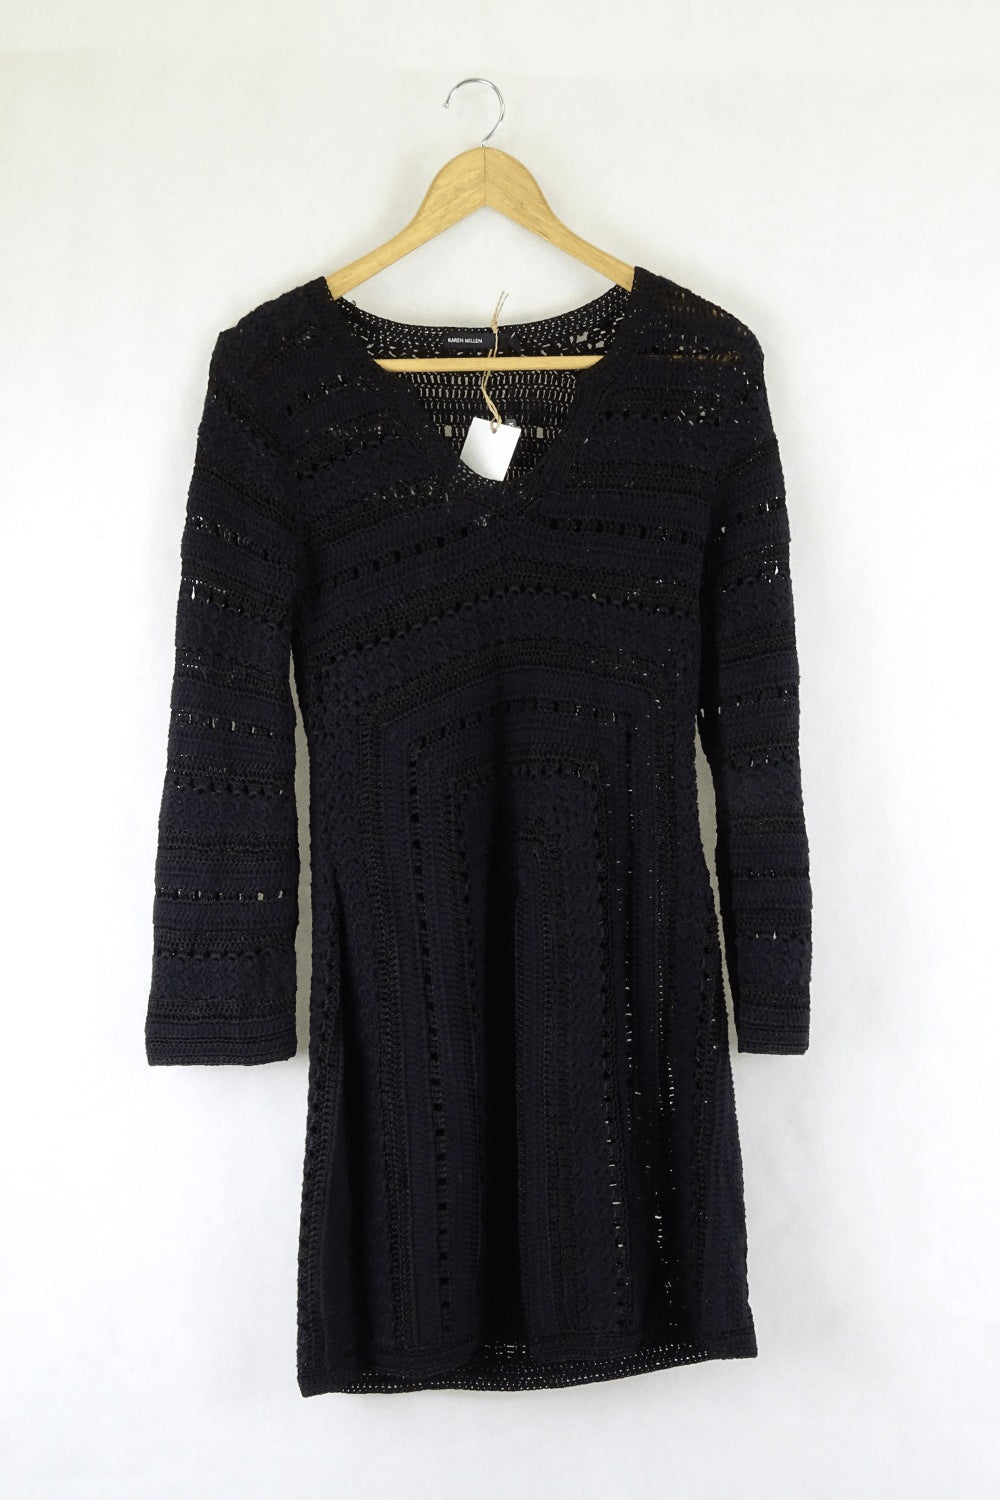 Karen Millen Black Bandage Knit Dress XS